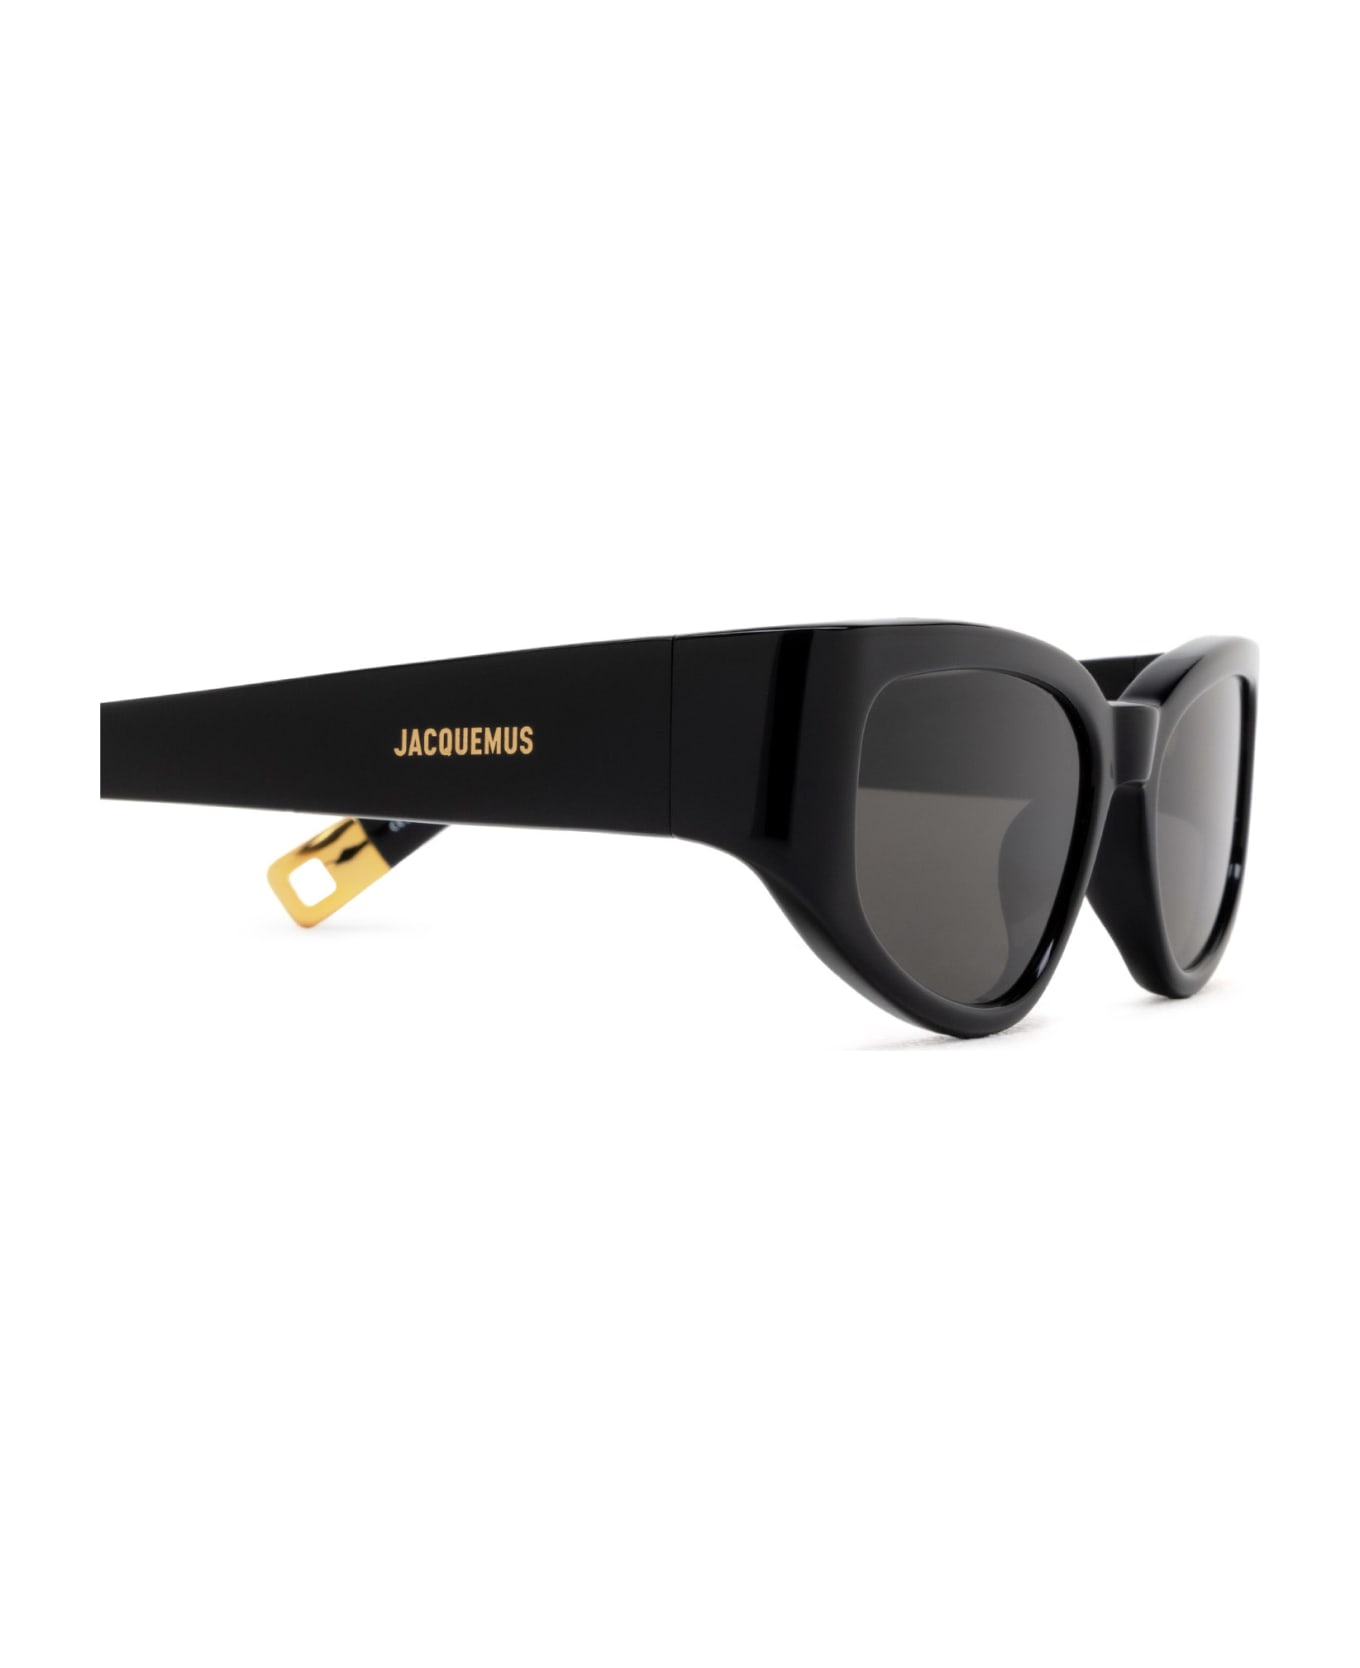 Jacquemus Jac5 Black Sunglasses - Black